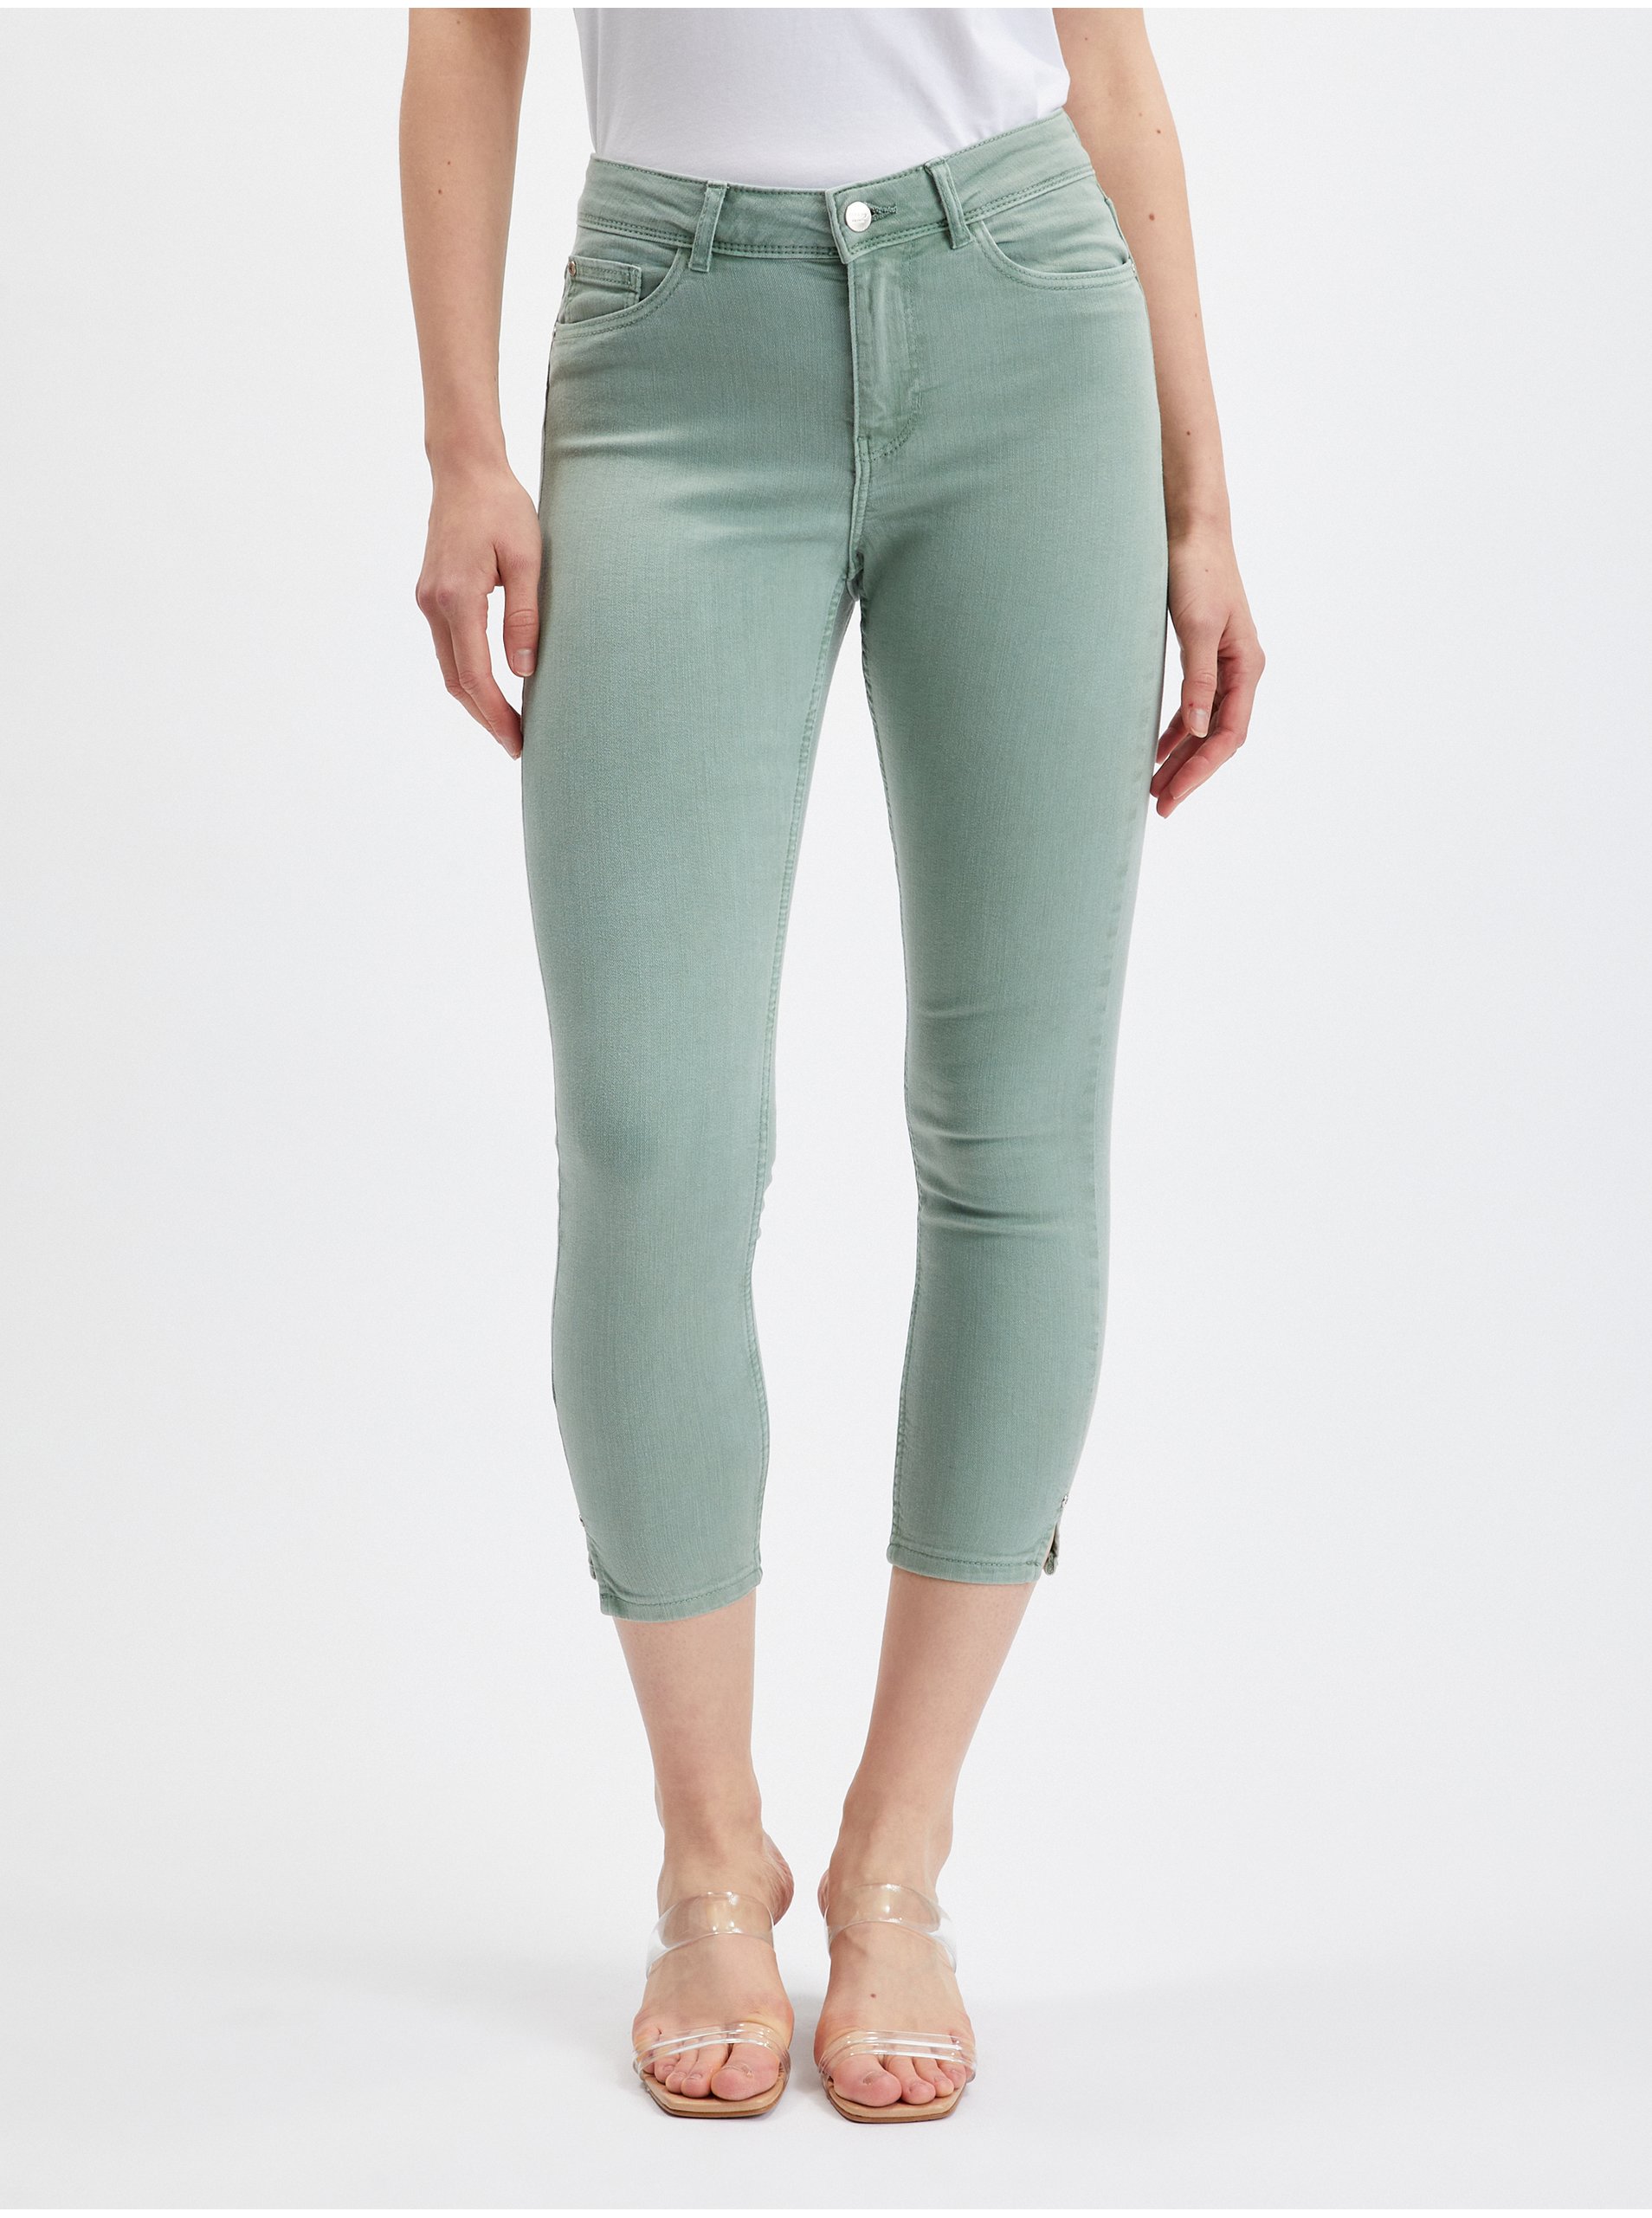 Lacno Svetlo zelené dámske skinny fit džínsy ORSAY